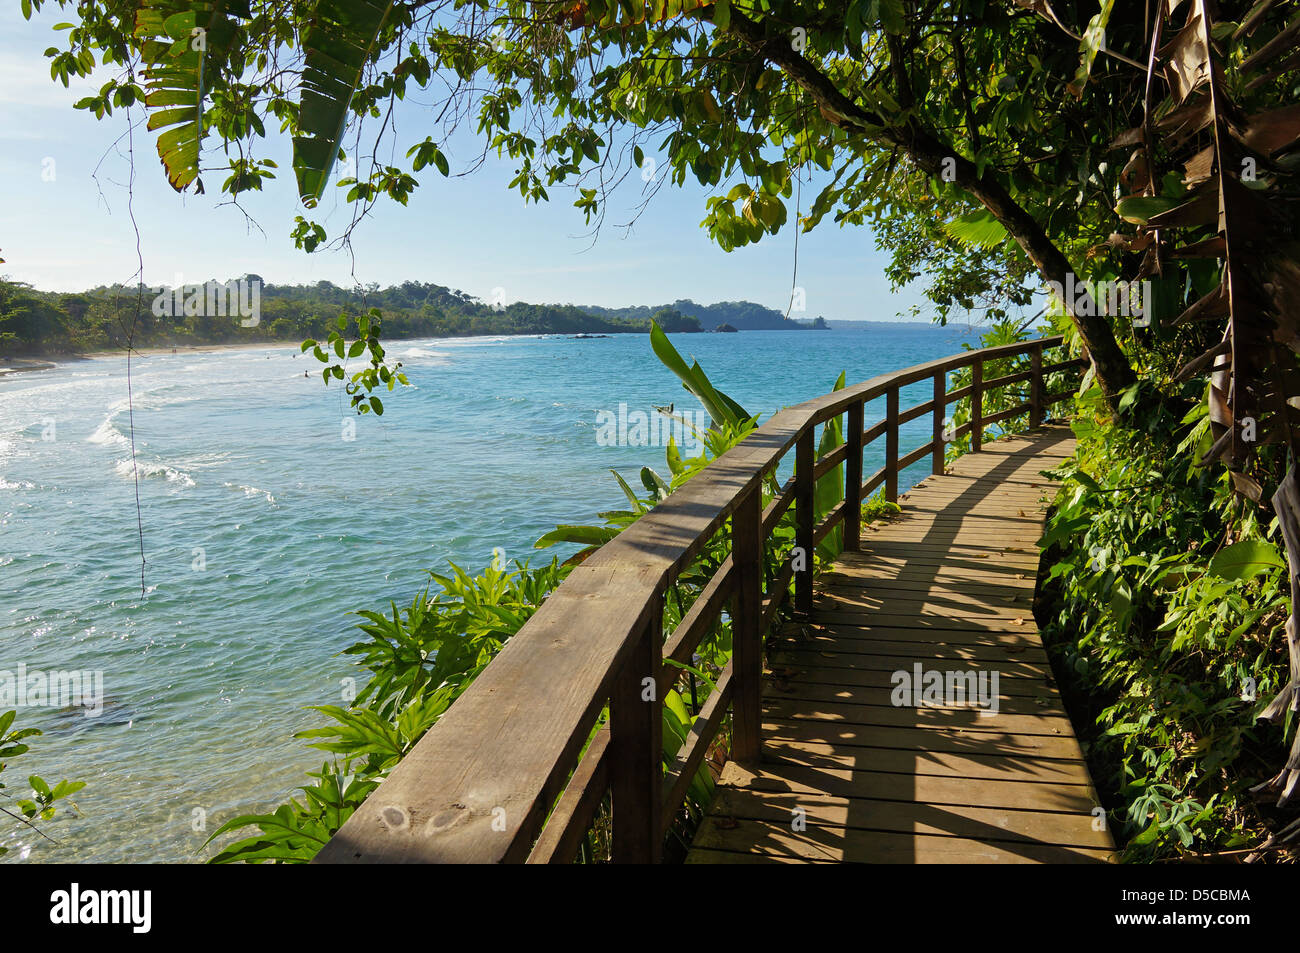 Footbridge with lush vegetation along the coast in a Caribbean island Stock Photo